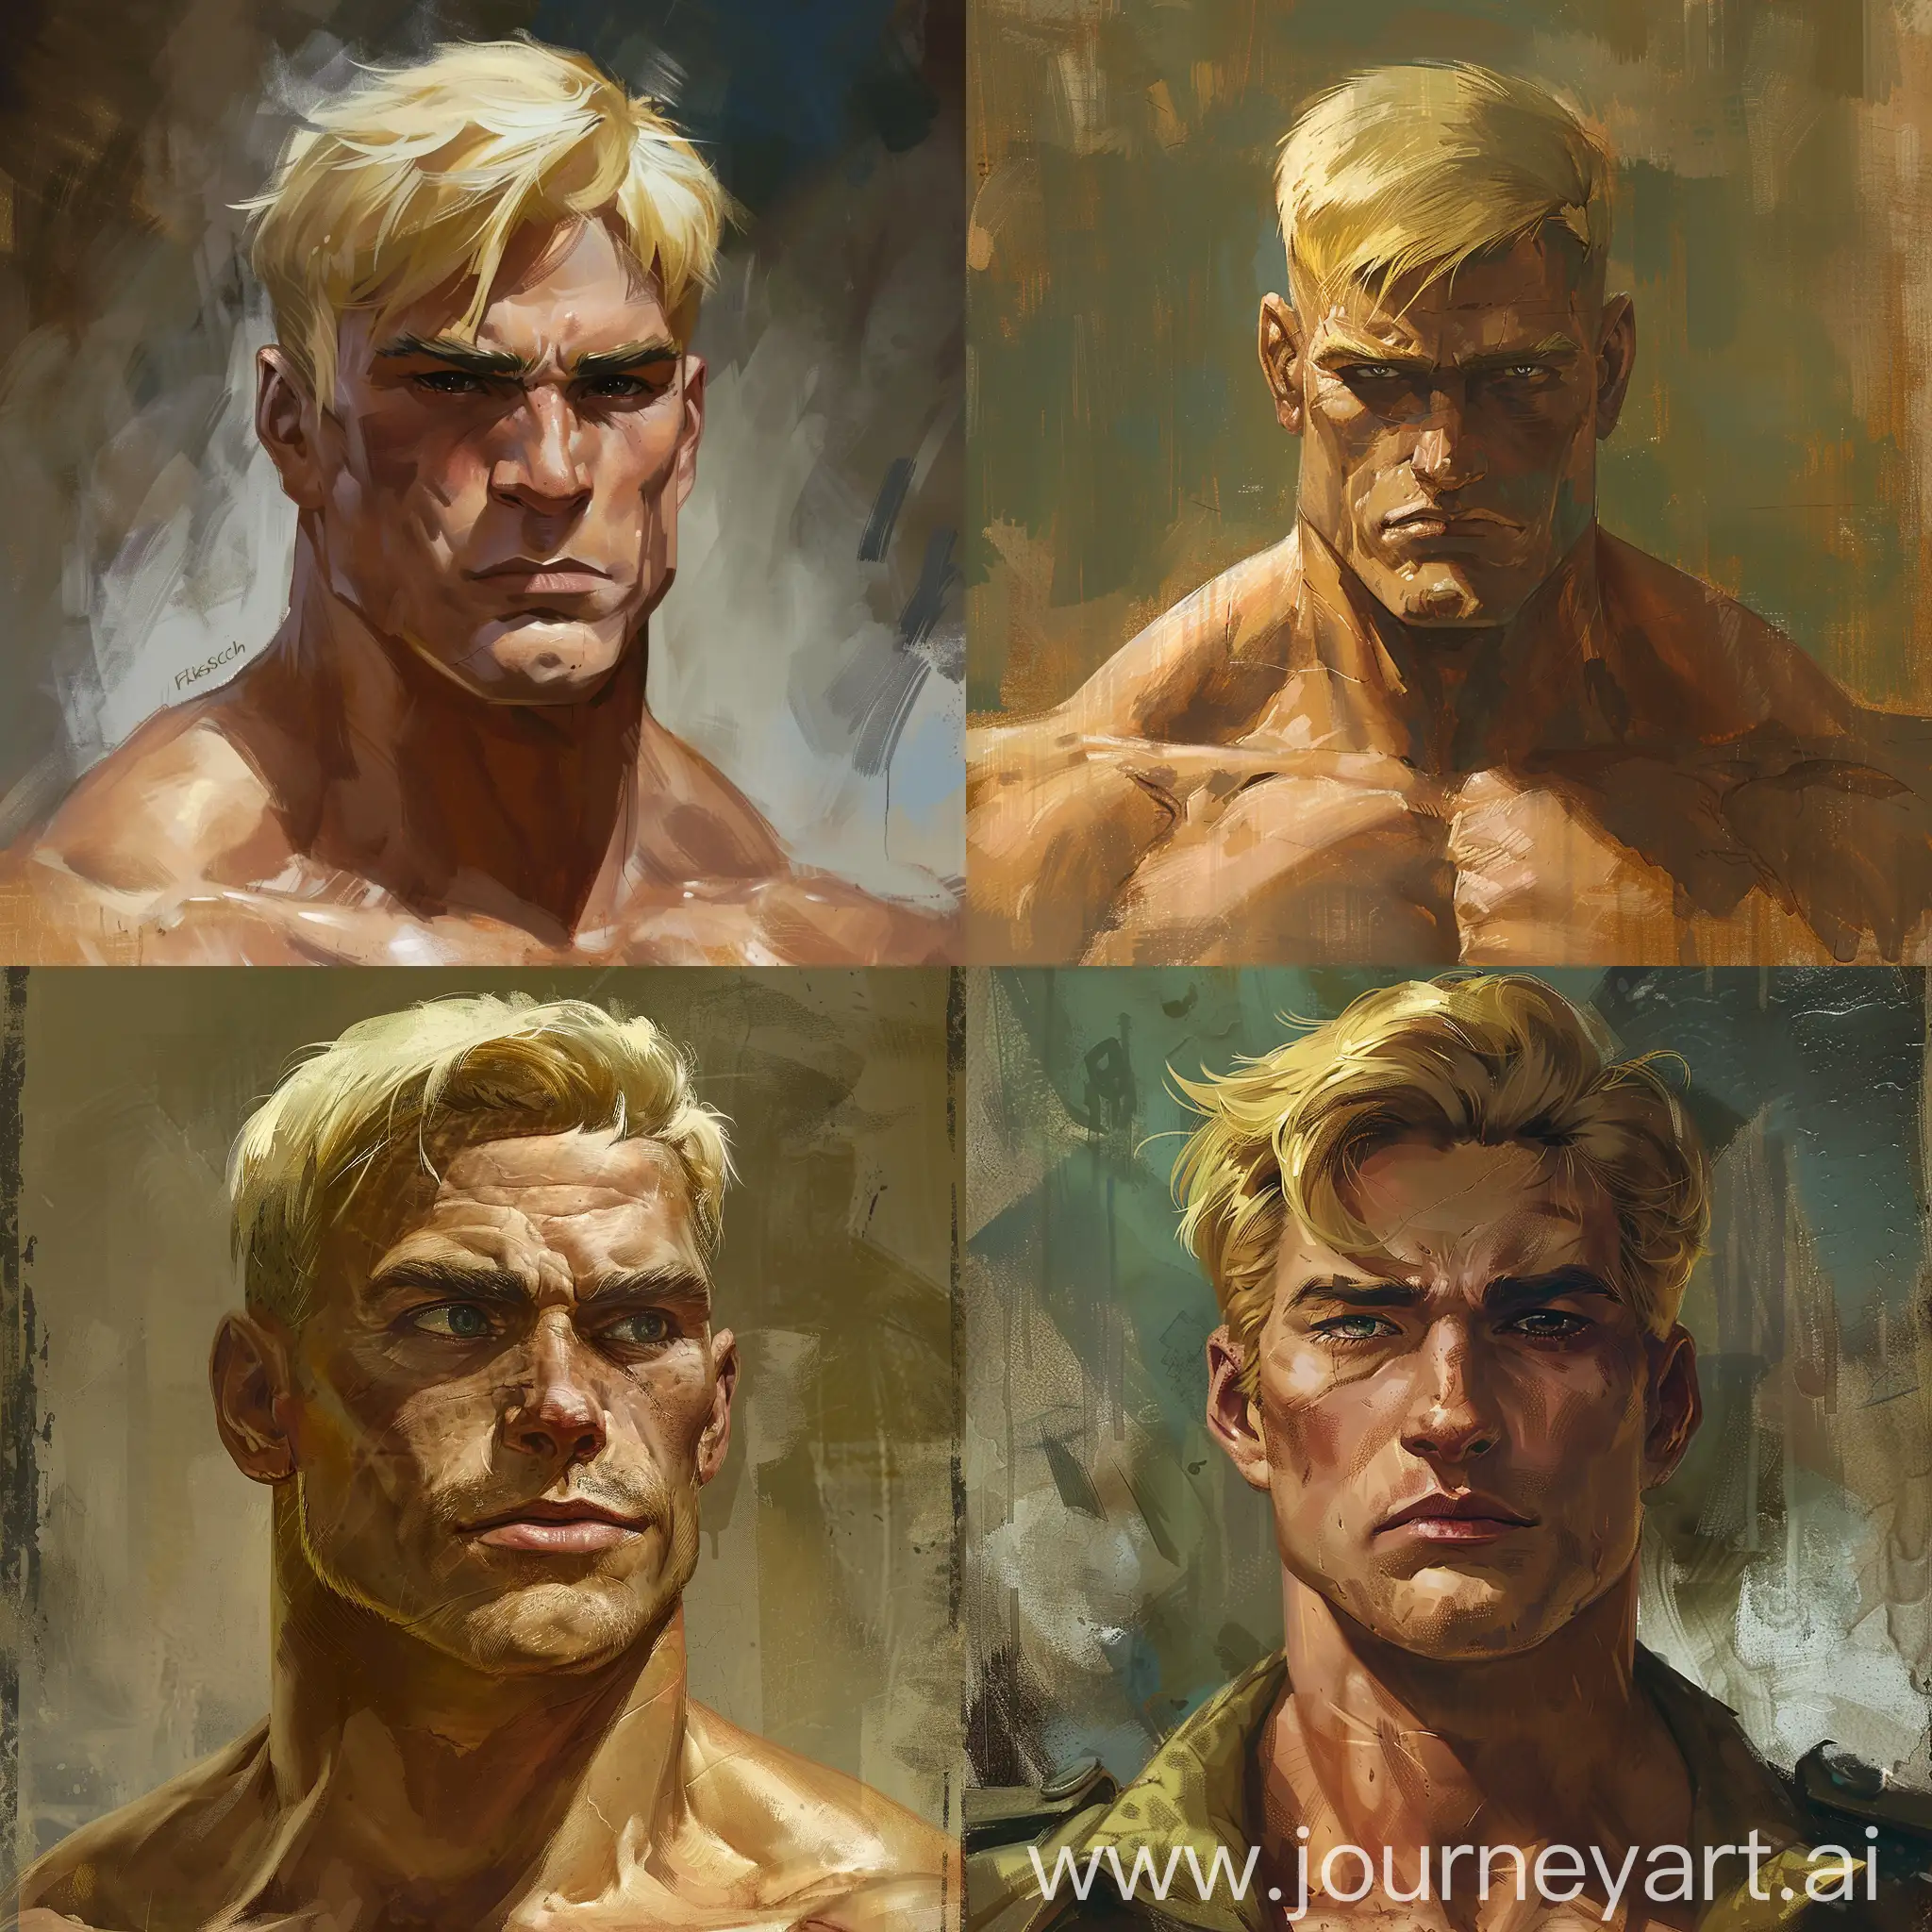 1950s-Style-Portrait-of-Reiner-Braun-from-Attack-on-Titan-Muscular-Blonde-Man-in-Profile